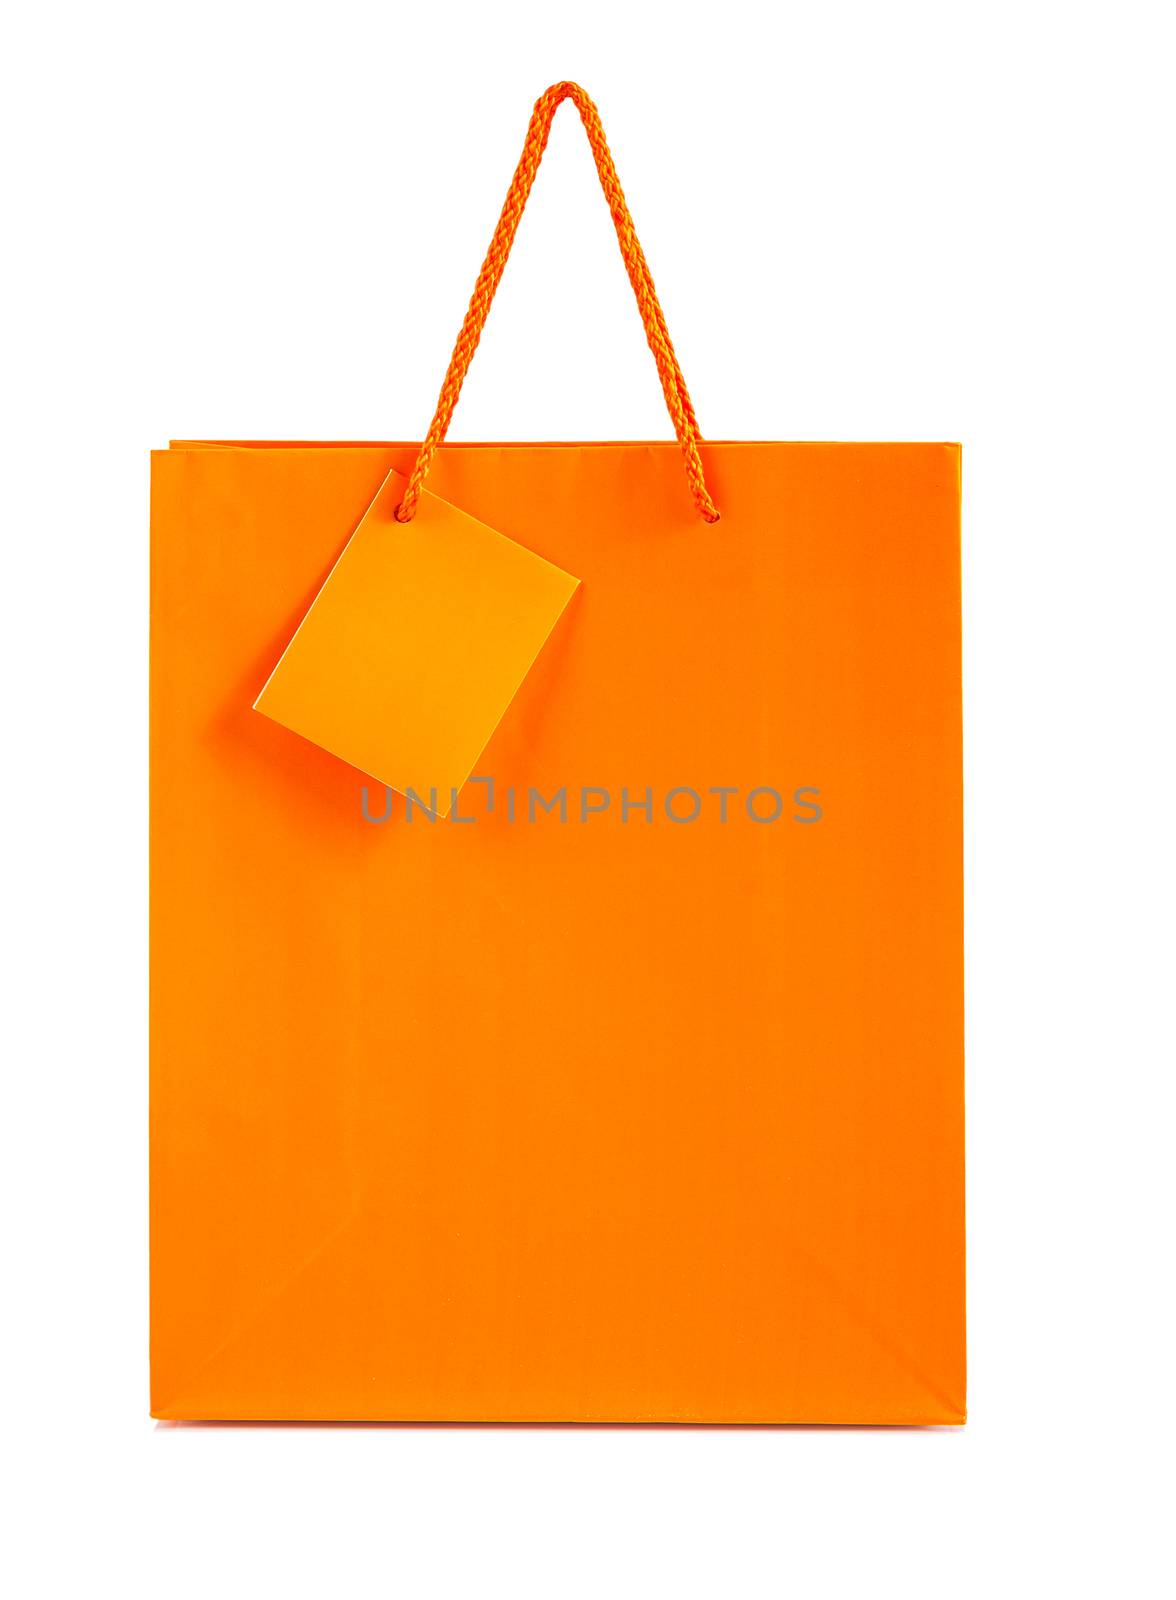 orange paper bag isolated